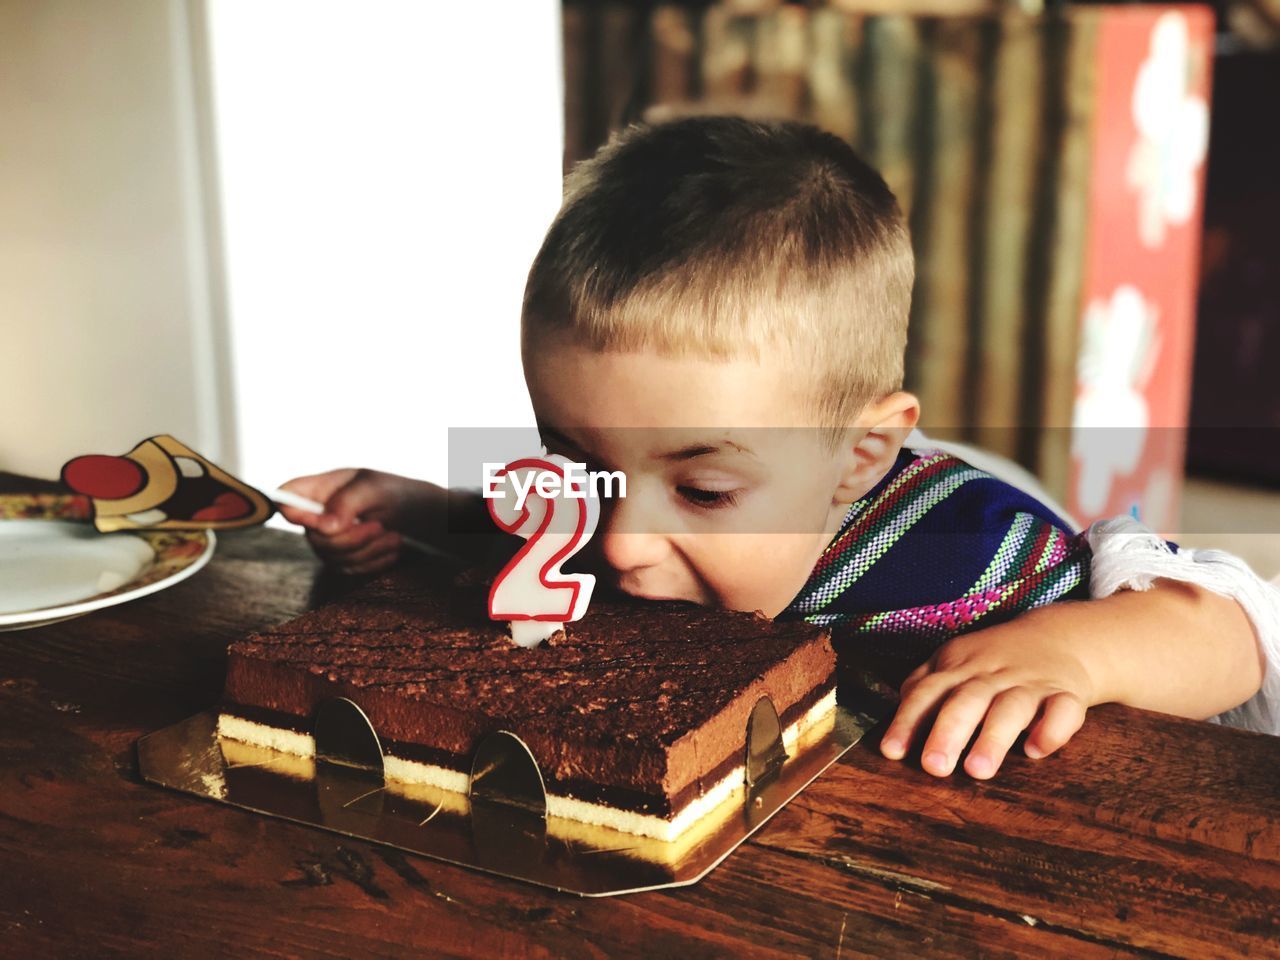 Boy eating birthday cake at table